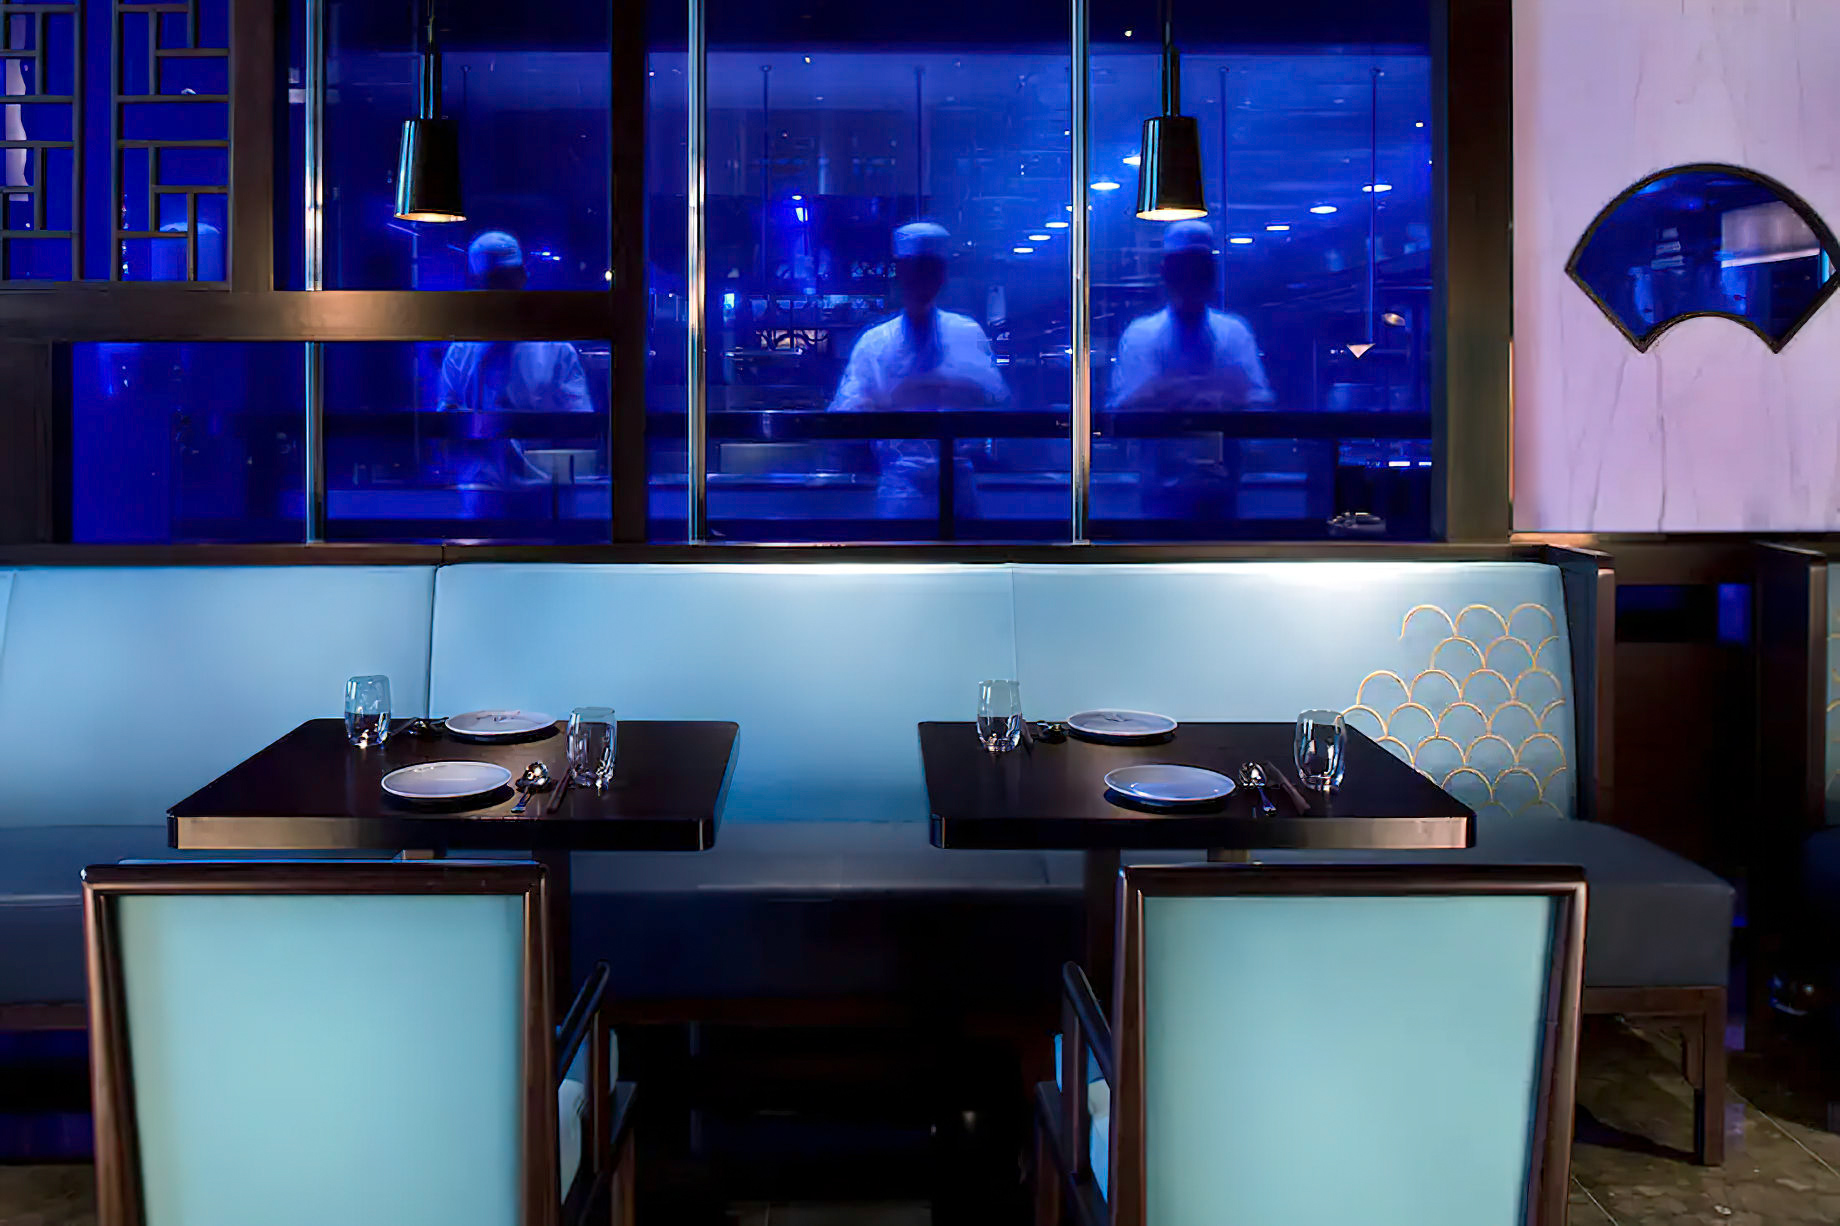 Emirates Palace Abu Dhabi Hotel – Abu Dhabi, UAE – Hakkasan Restaurant Bar and Lounge